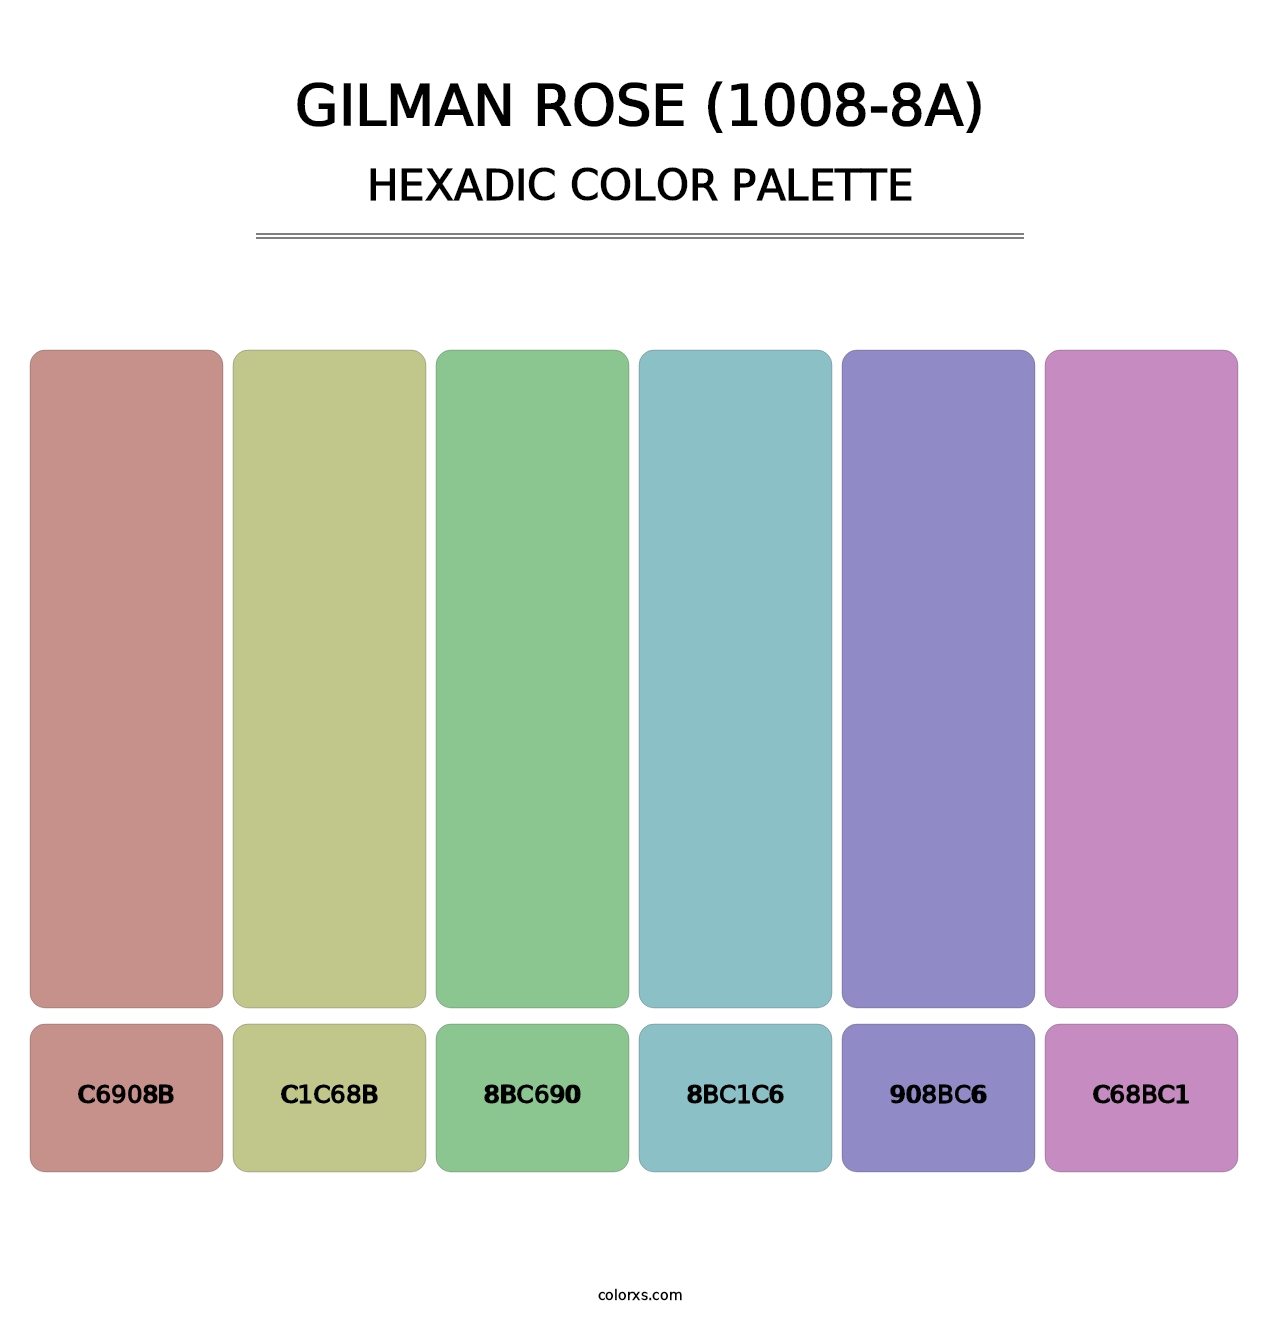 Gilman Rose (1008-8A) - Hexadic Color Palette